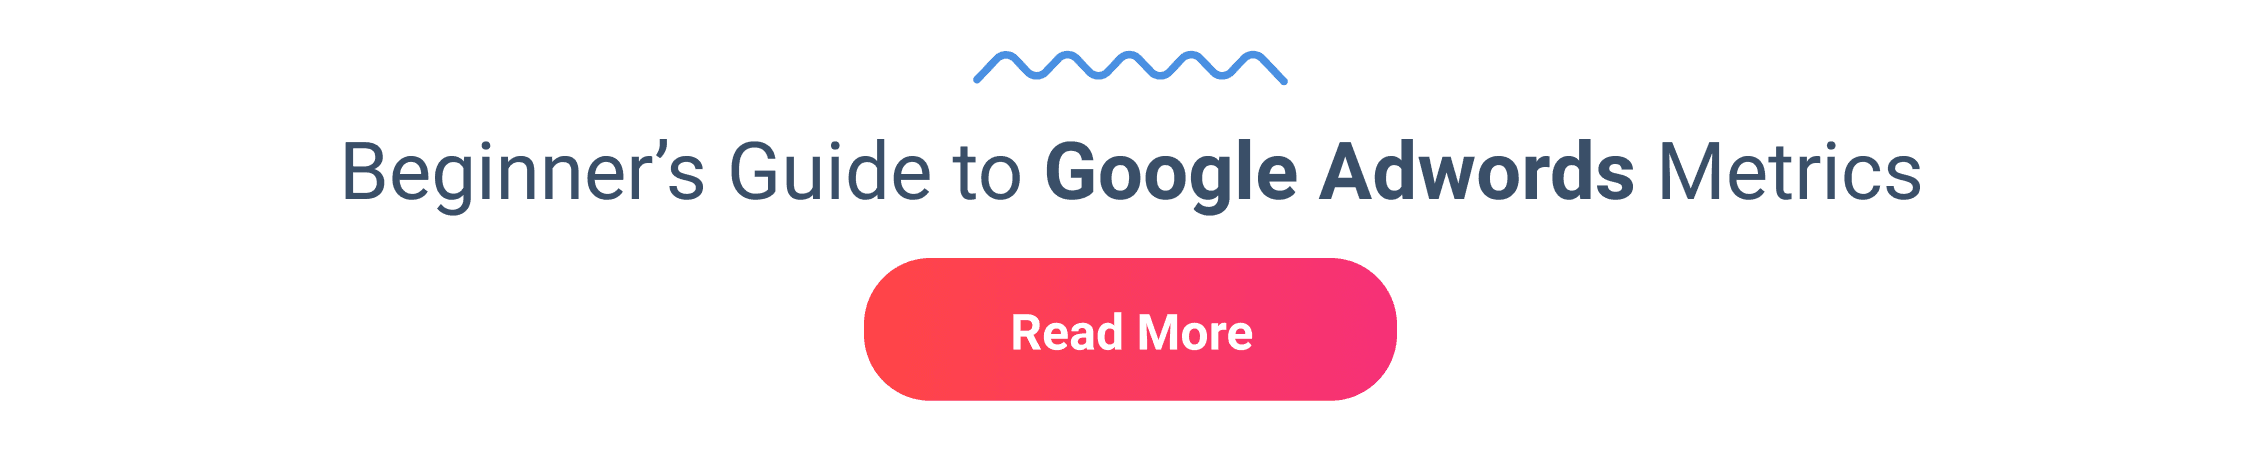 Beginners guide to Google Adwords Metrics banner